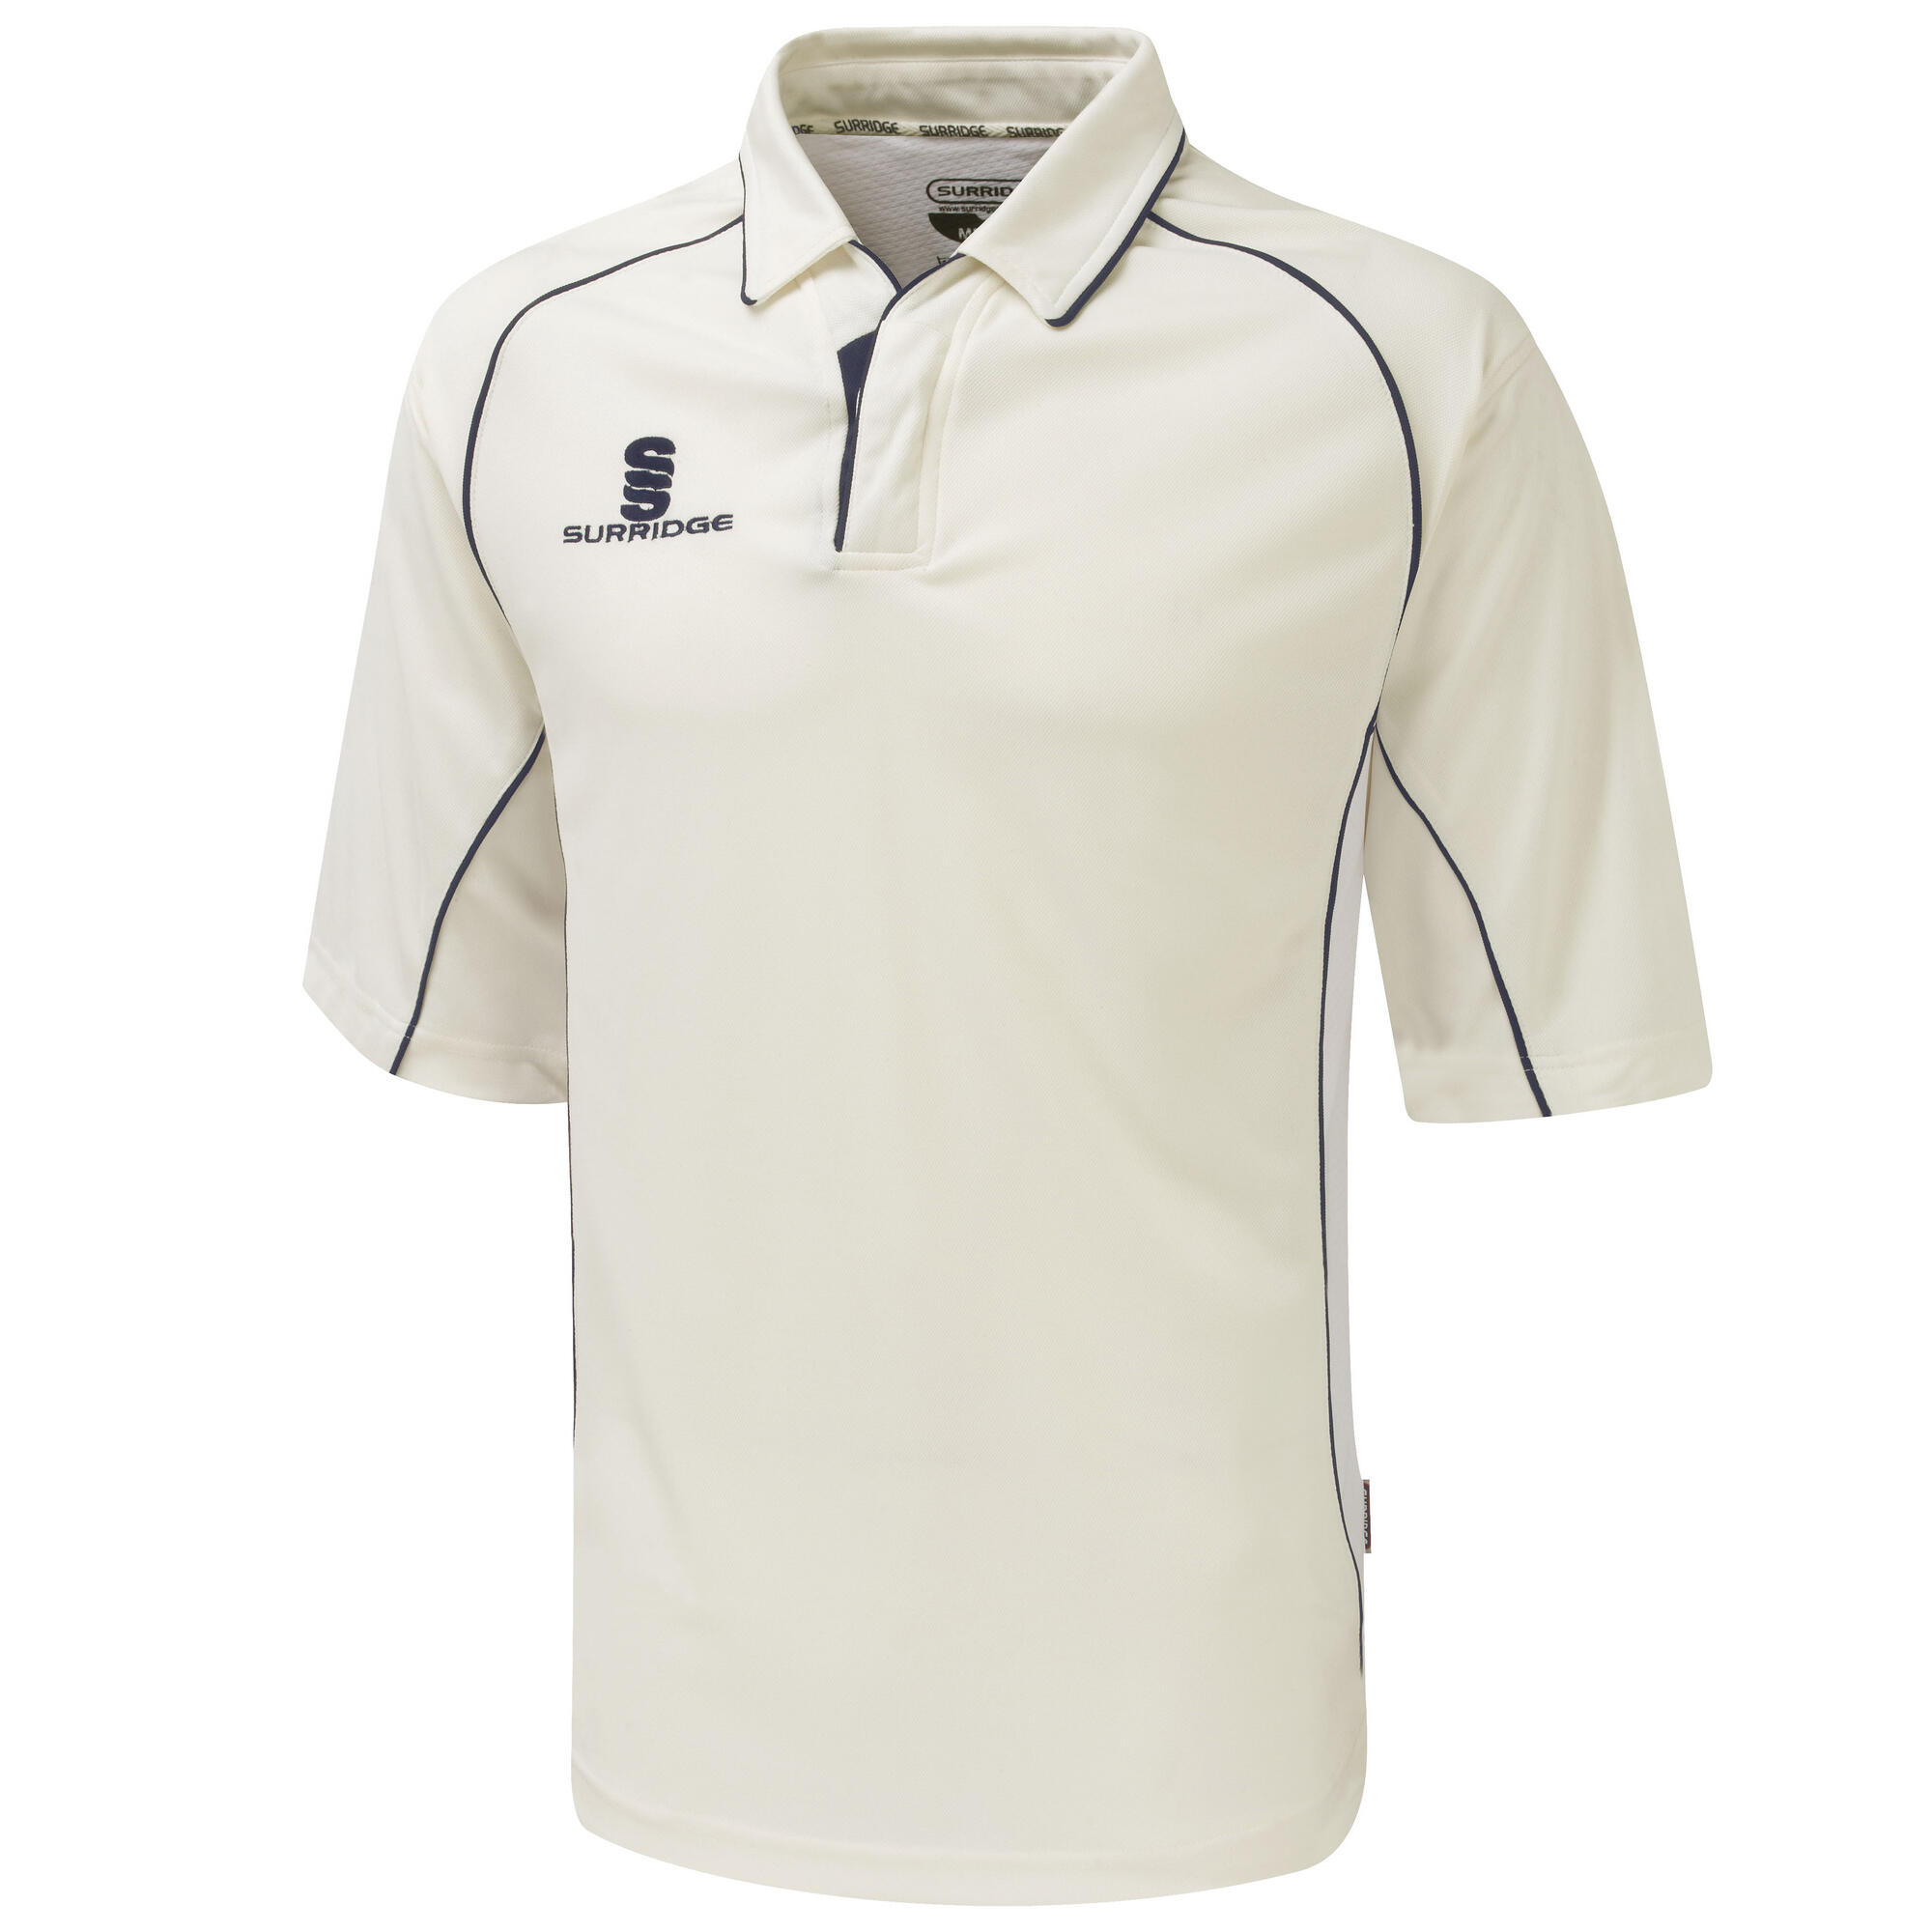 SURRIDGE Boys Kids Sports Premier Shirt 3/4 Polo Shirt (White/Navy trim)